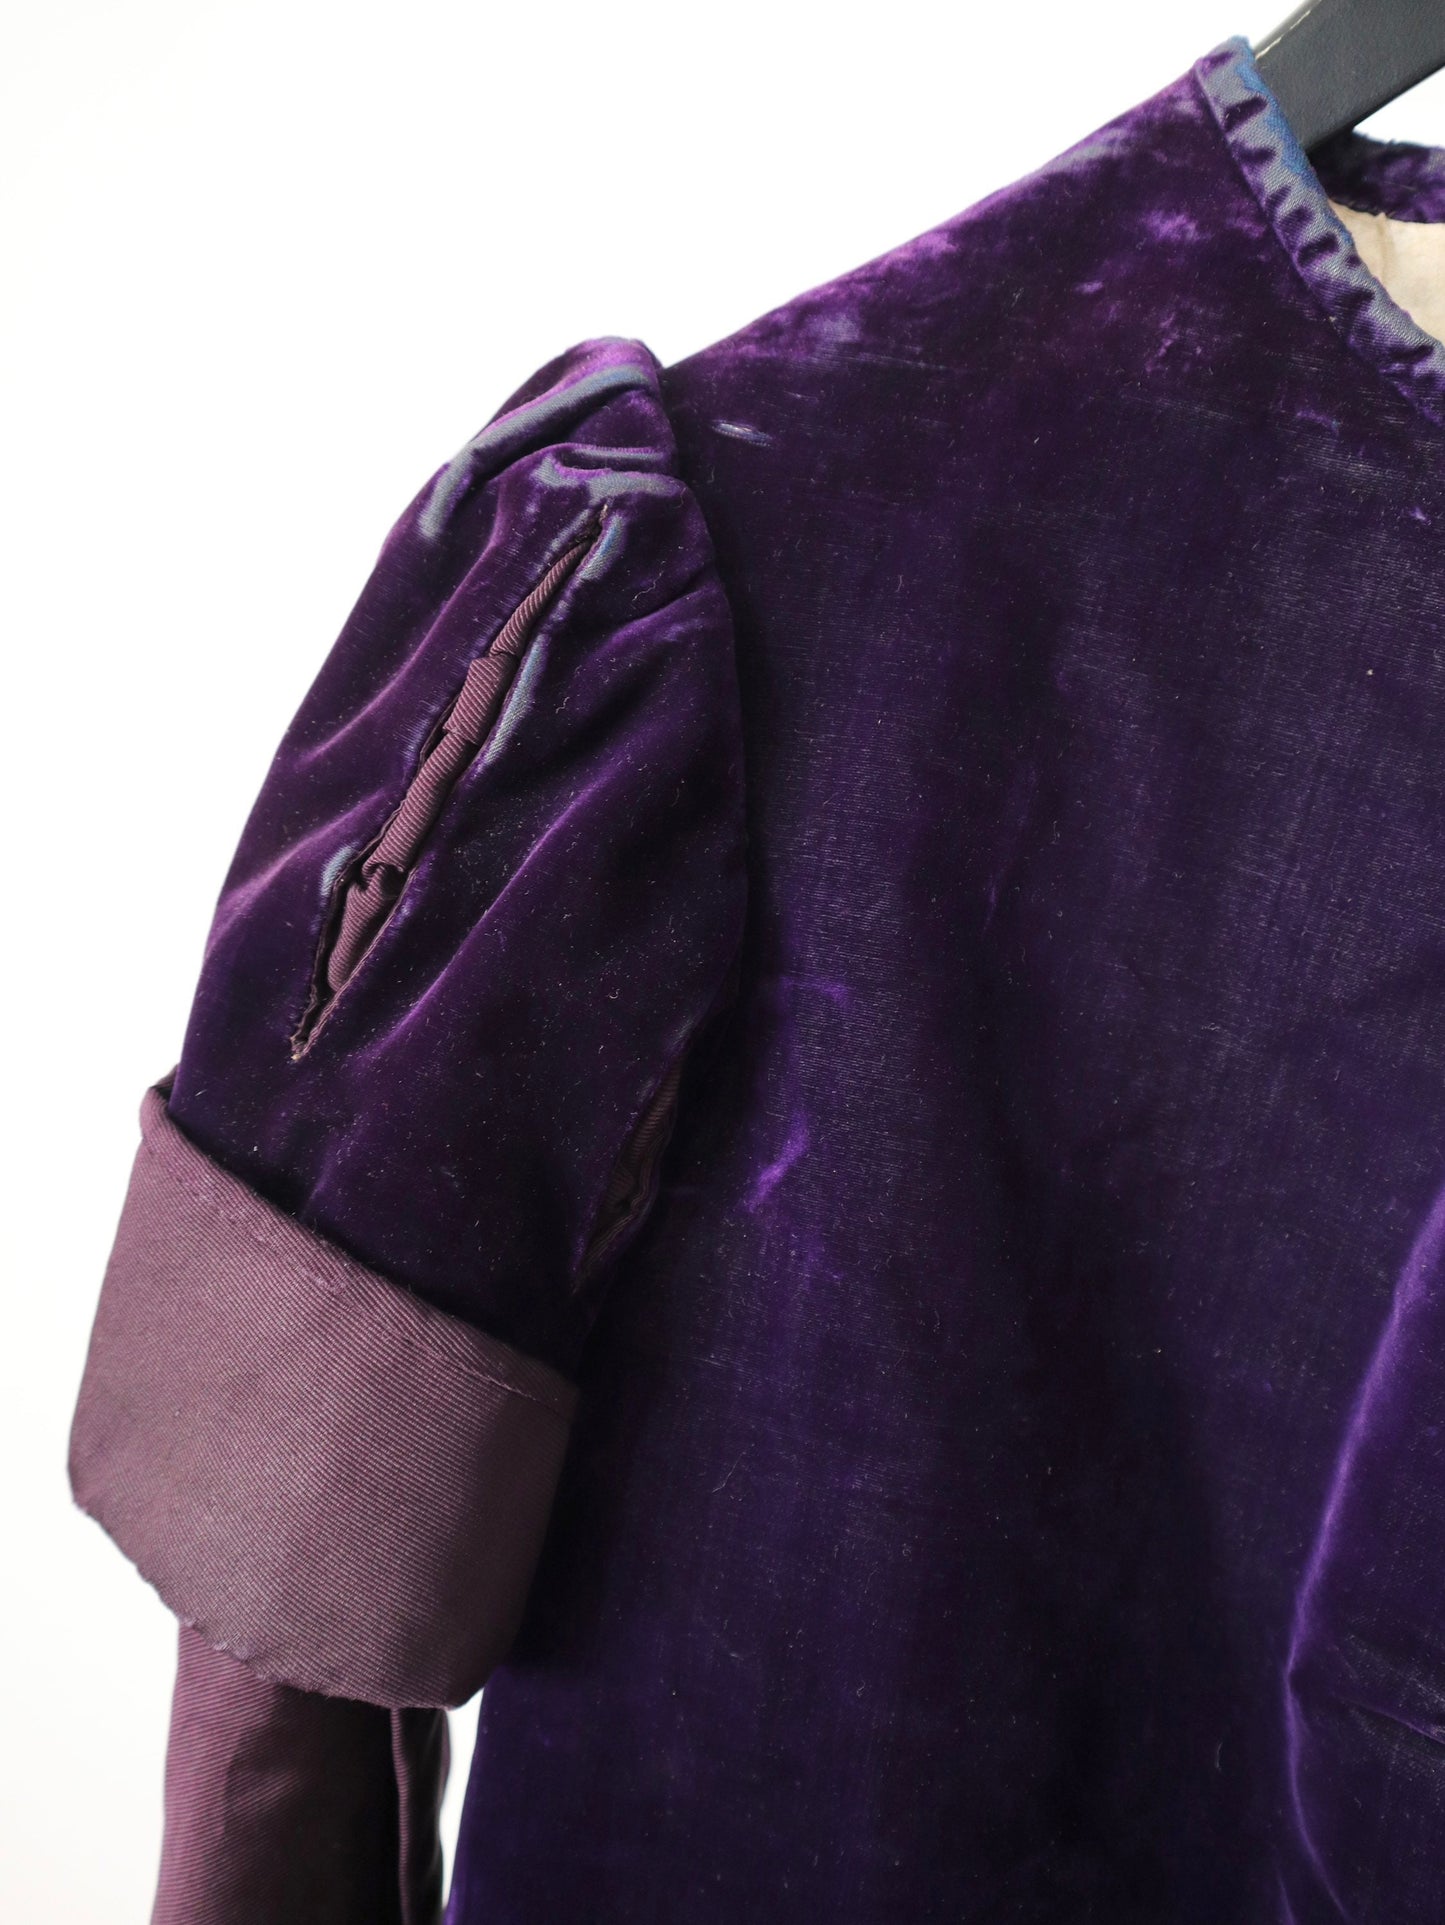 Antique French Opera Costume Tunic 1887 Purple Silk Velvet Tunic Doublet Renaissance Paris Theatre 19th Century